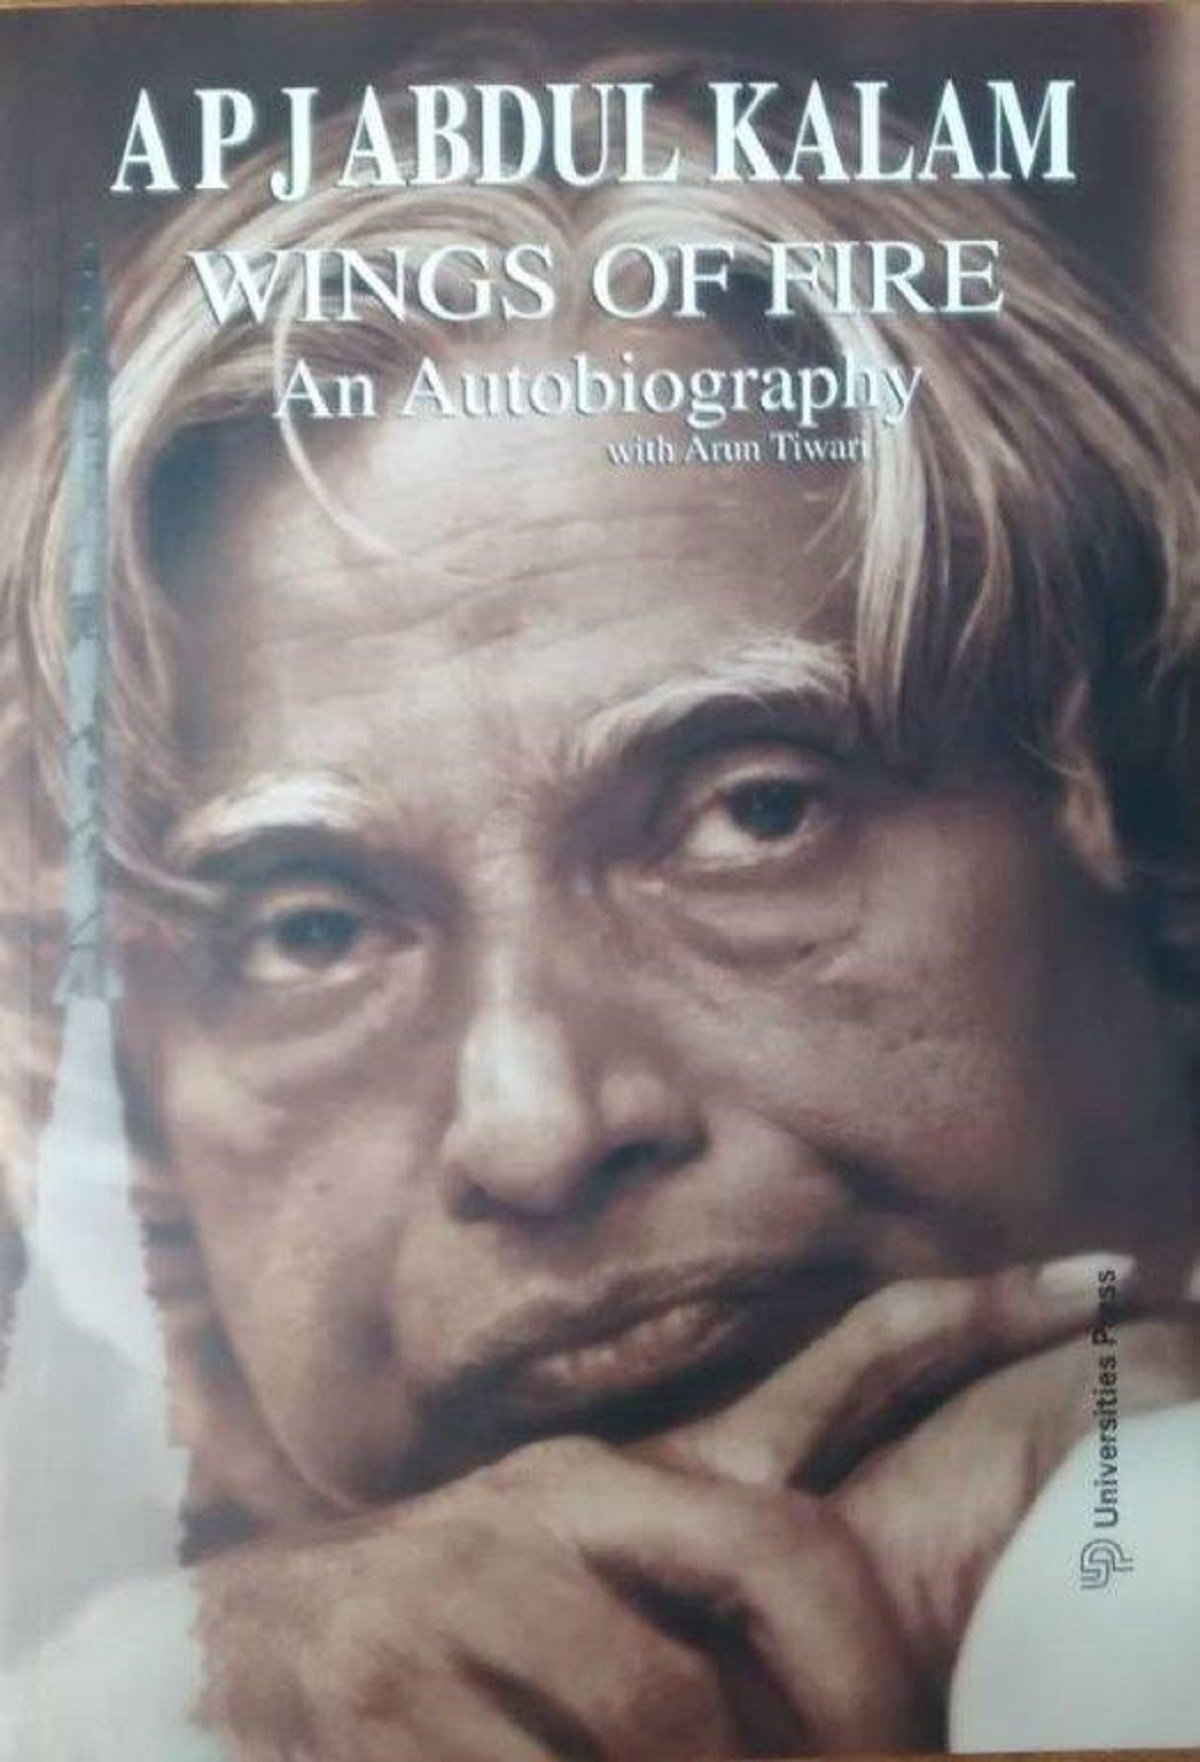 famous autobiography books pdf free download